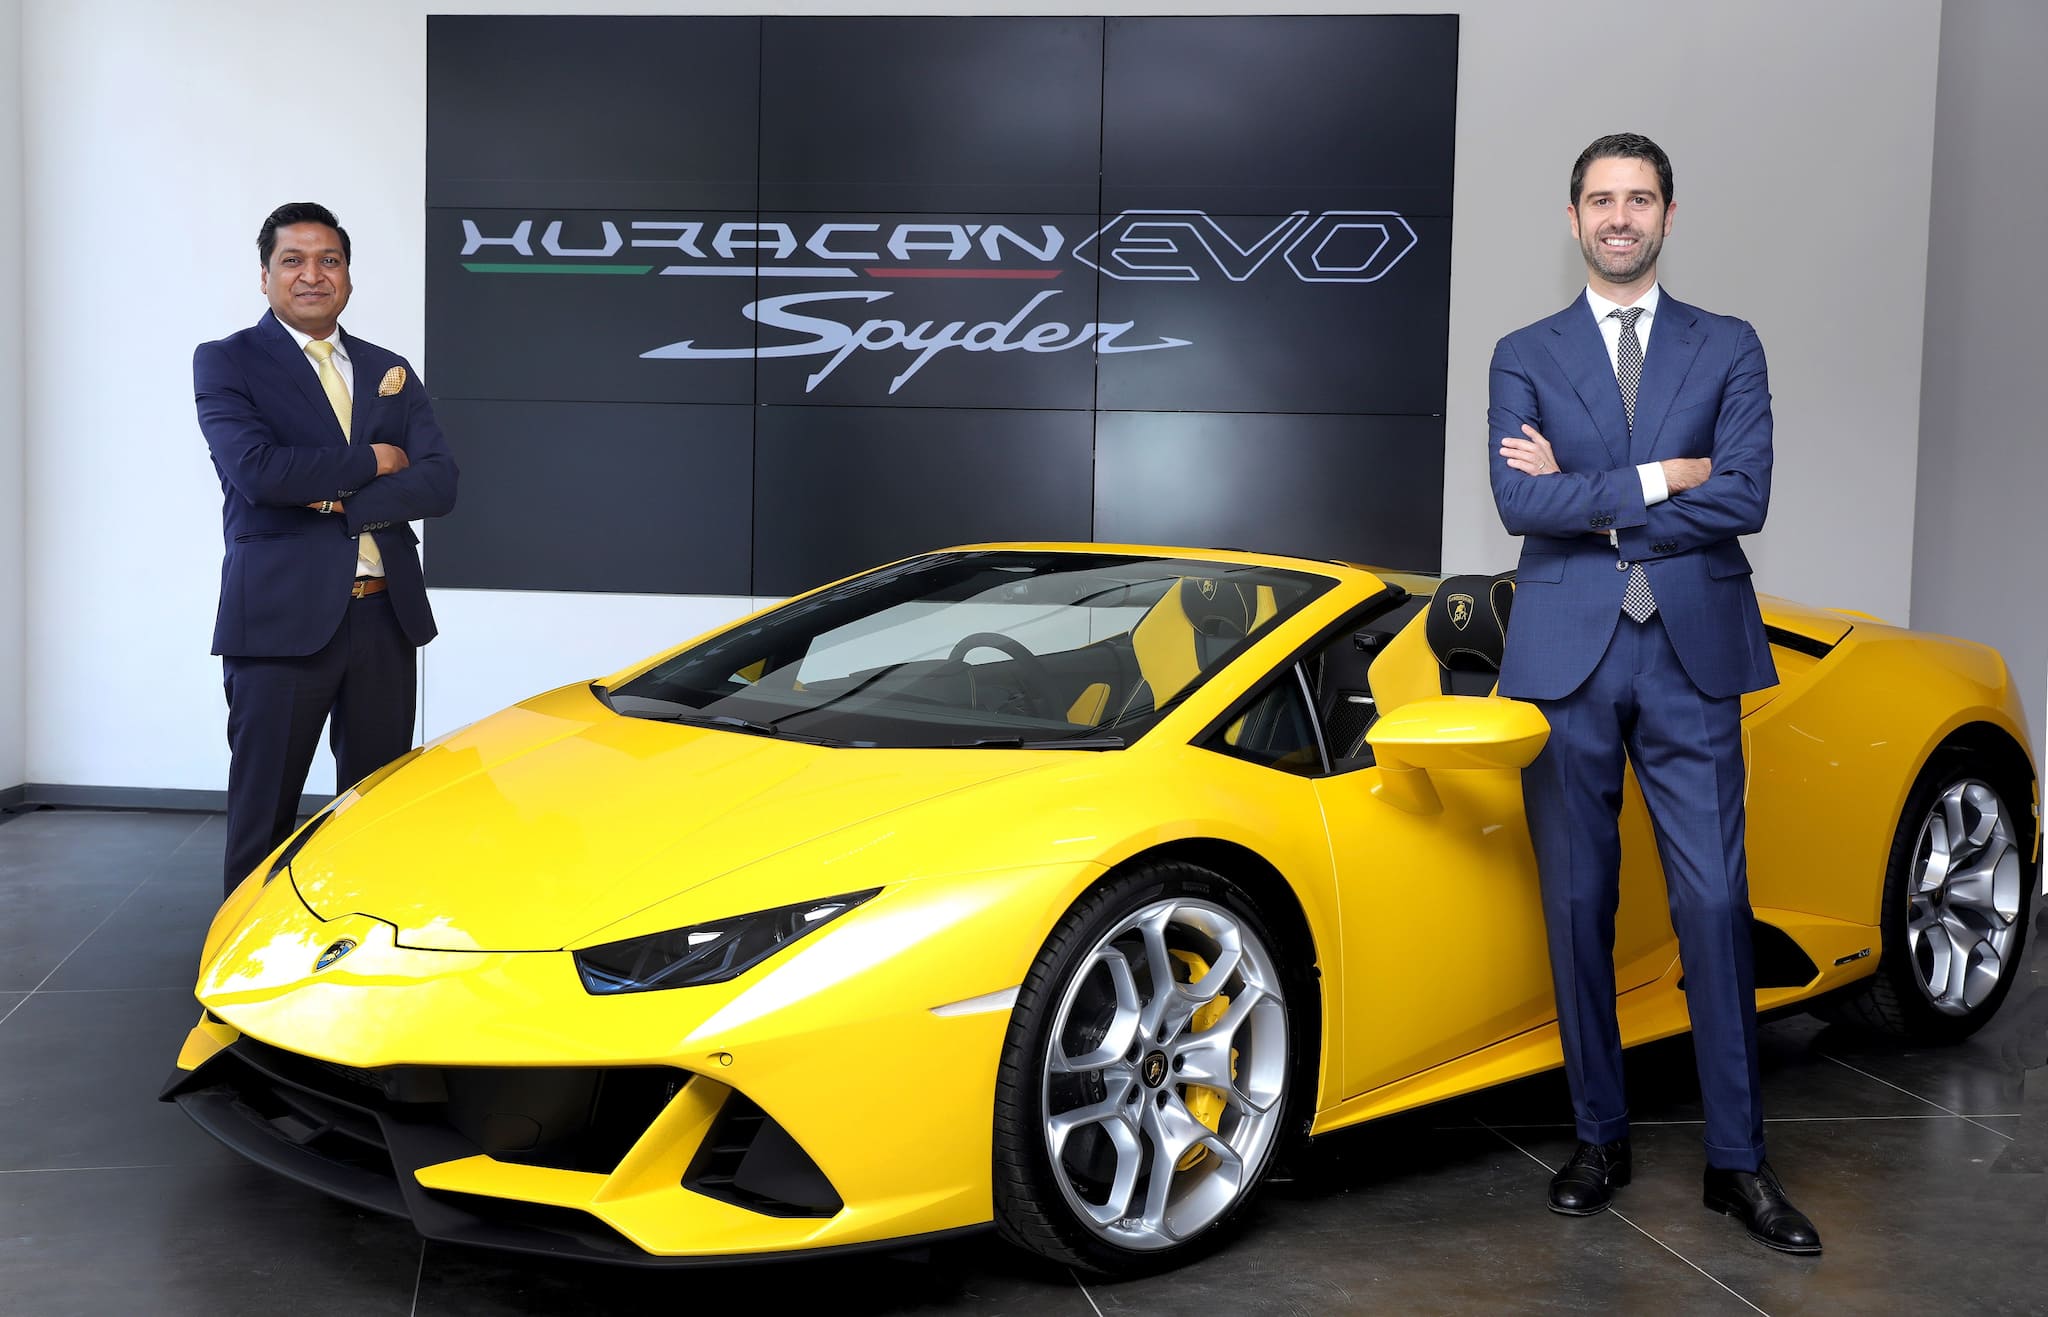 Exclusive: Lamborghini CEO Matteo Ortenzi says working on hybrid technology setup for all models